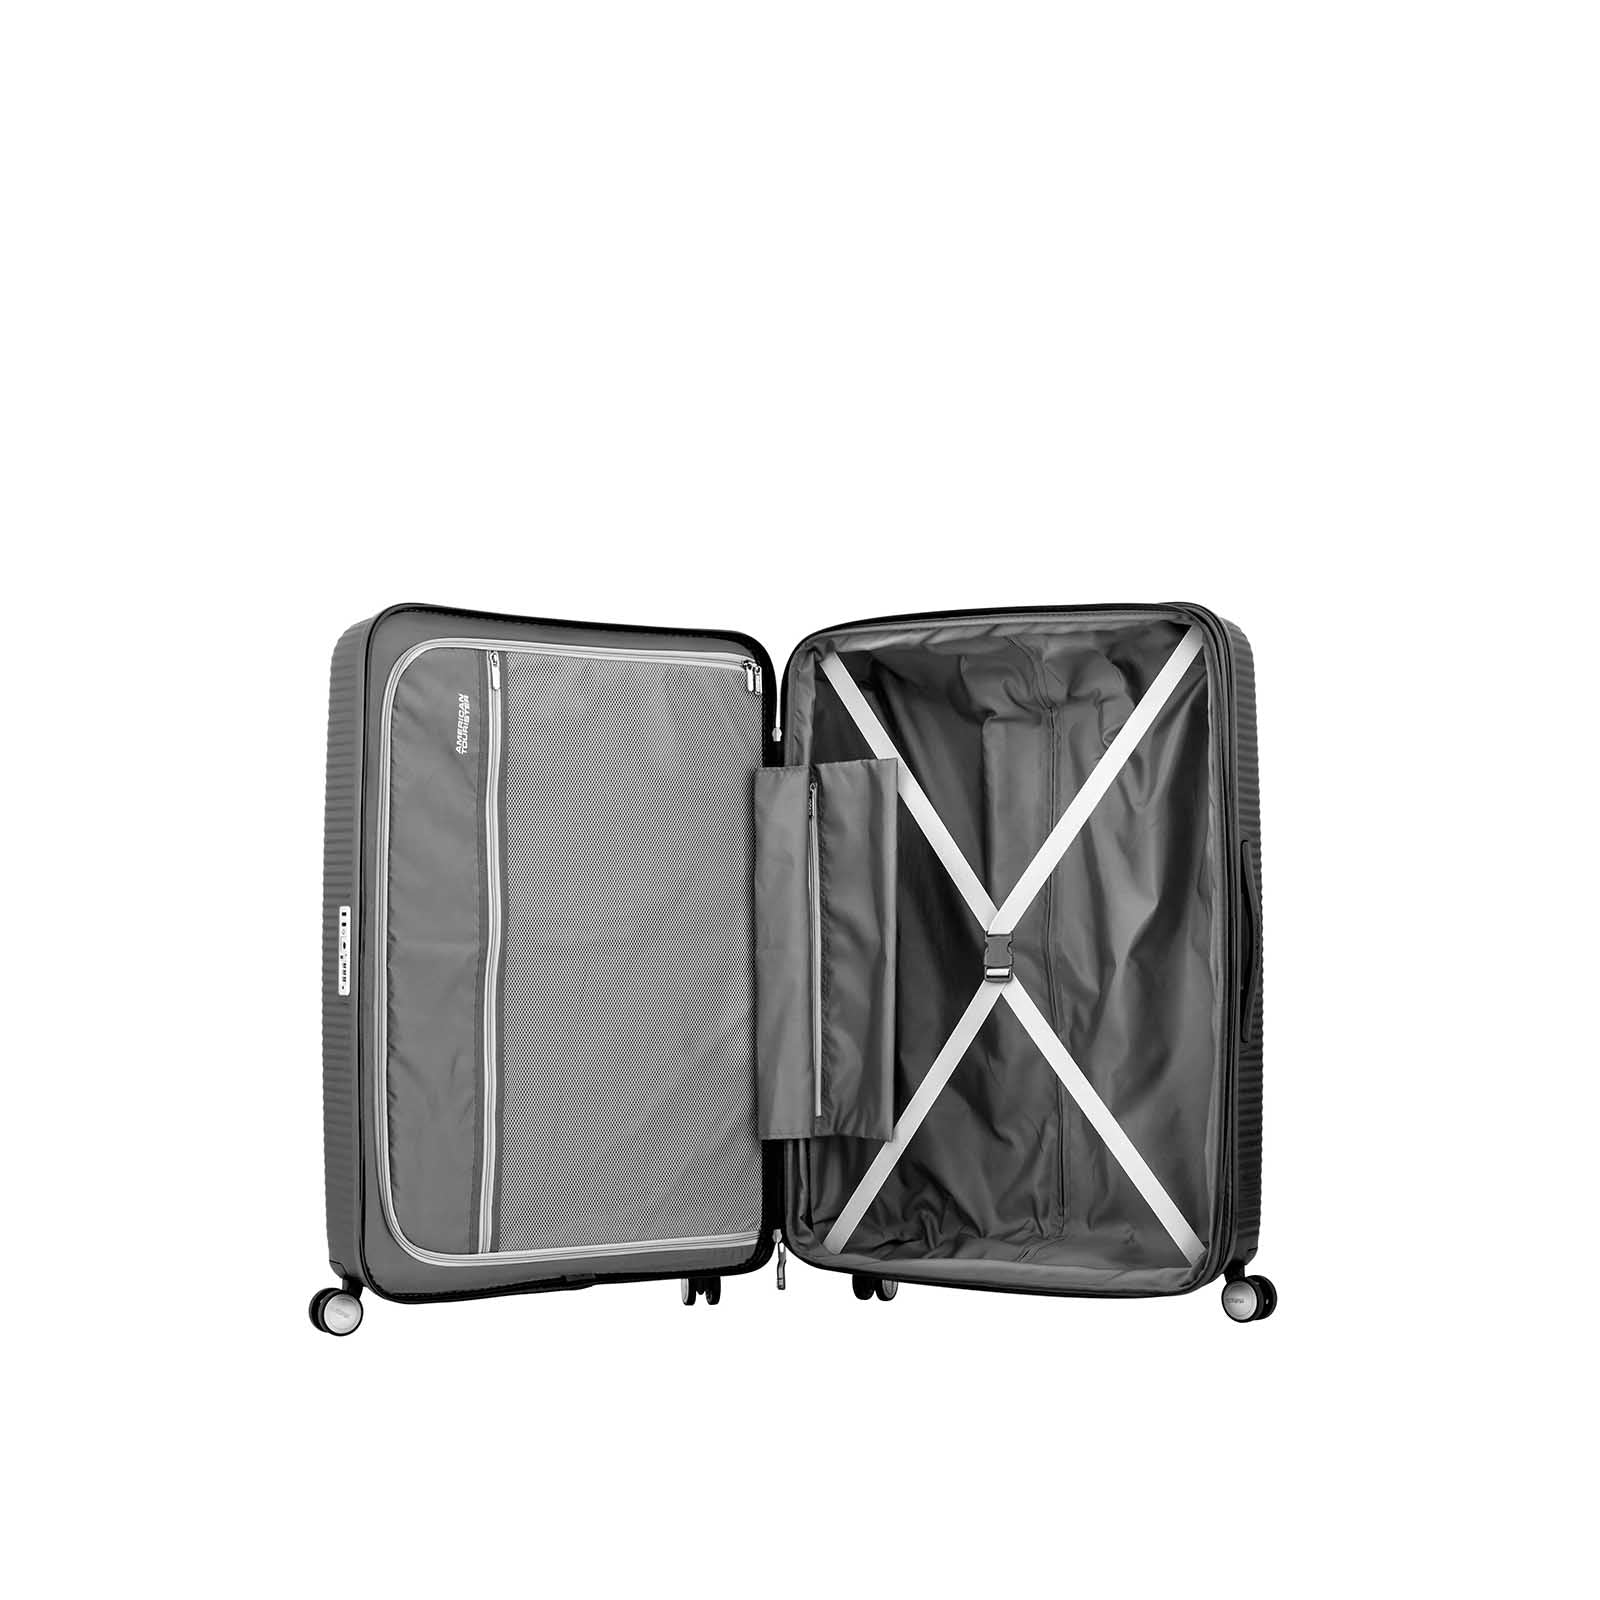 American-Tourister-Curio-2-80cm-Suitcase-Black-Open